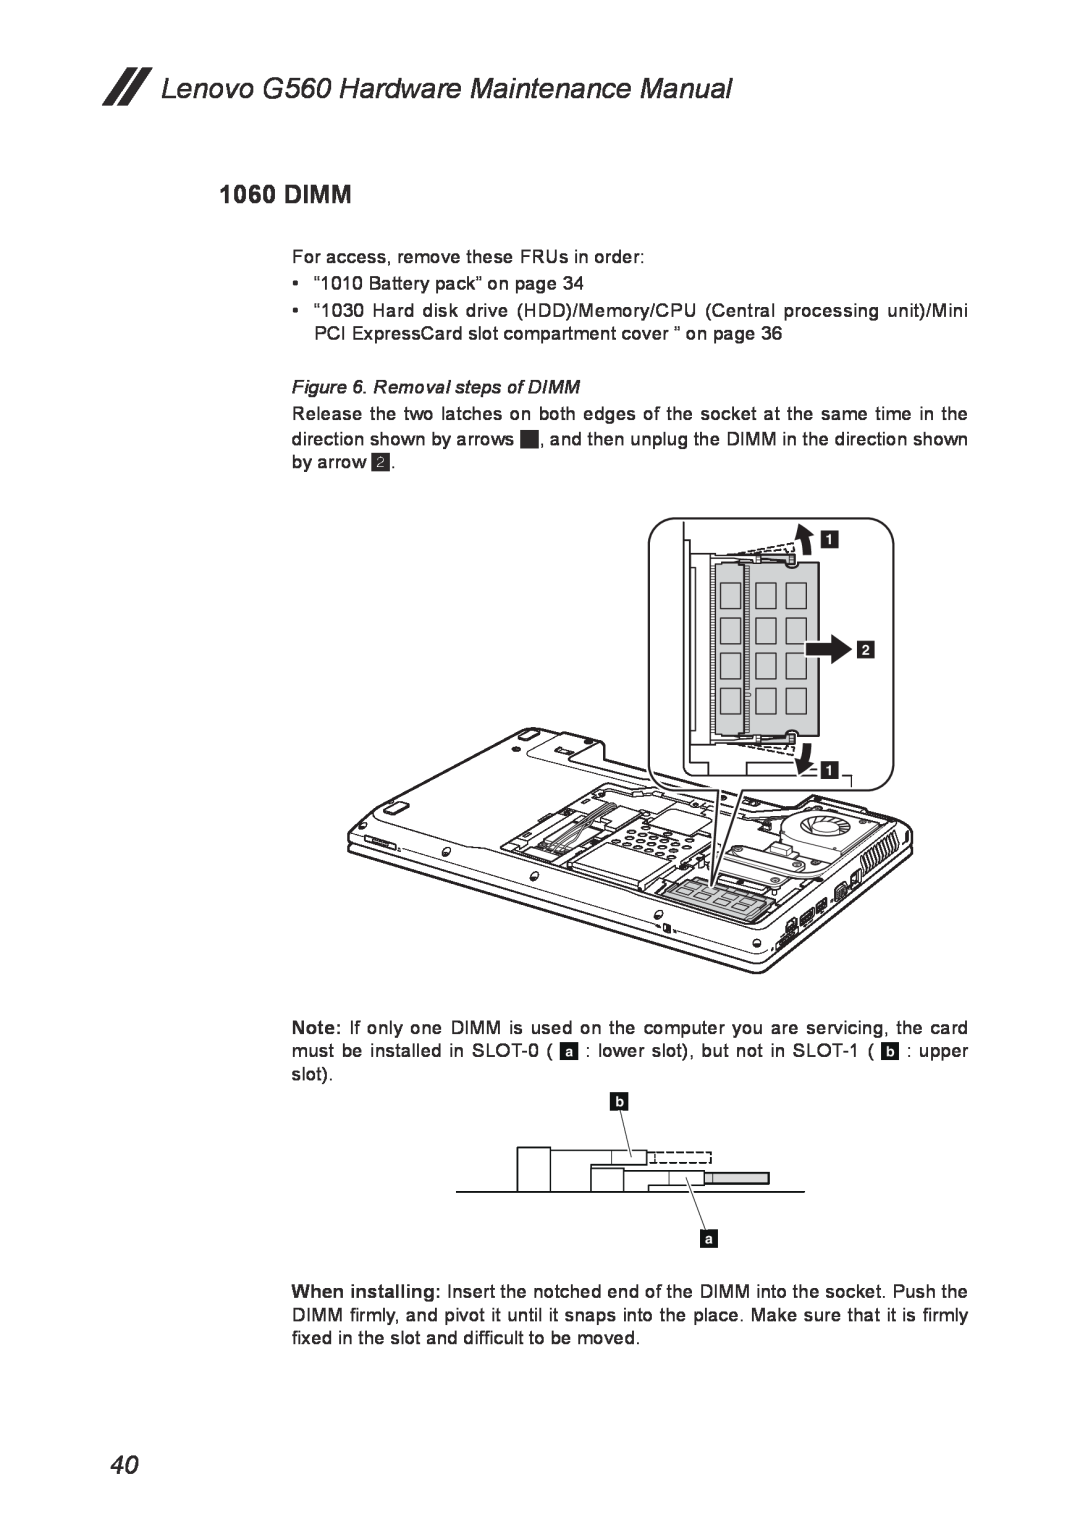 Lenovo manual Dimm, Lenovo G560 Hardware Maintenance Manual, Removal steps of DIMM 